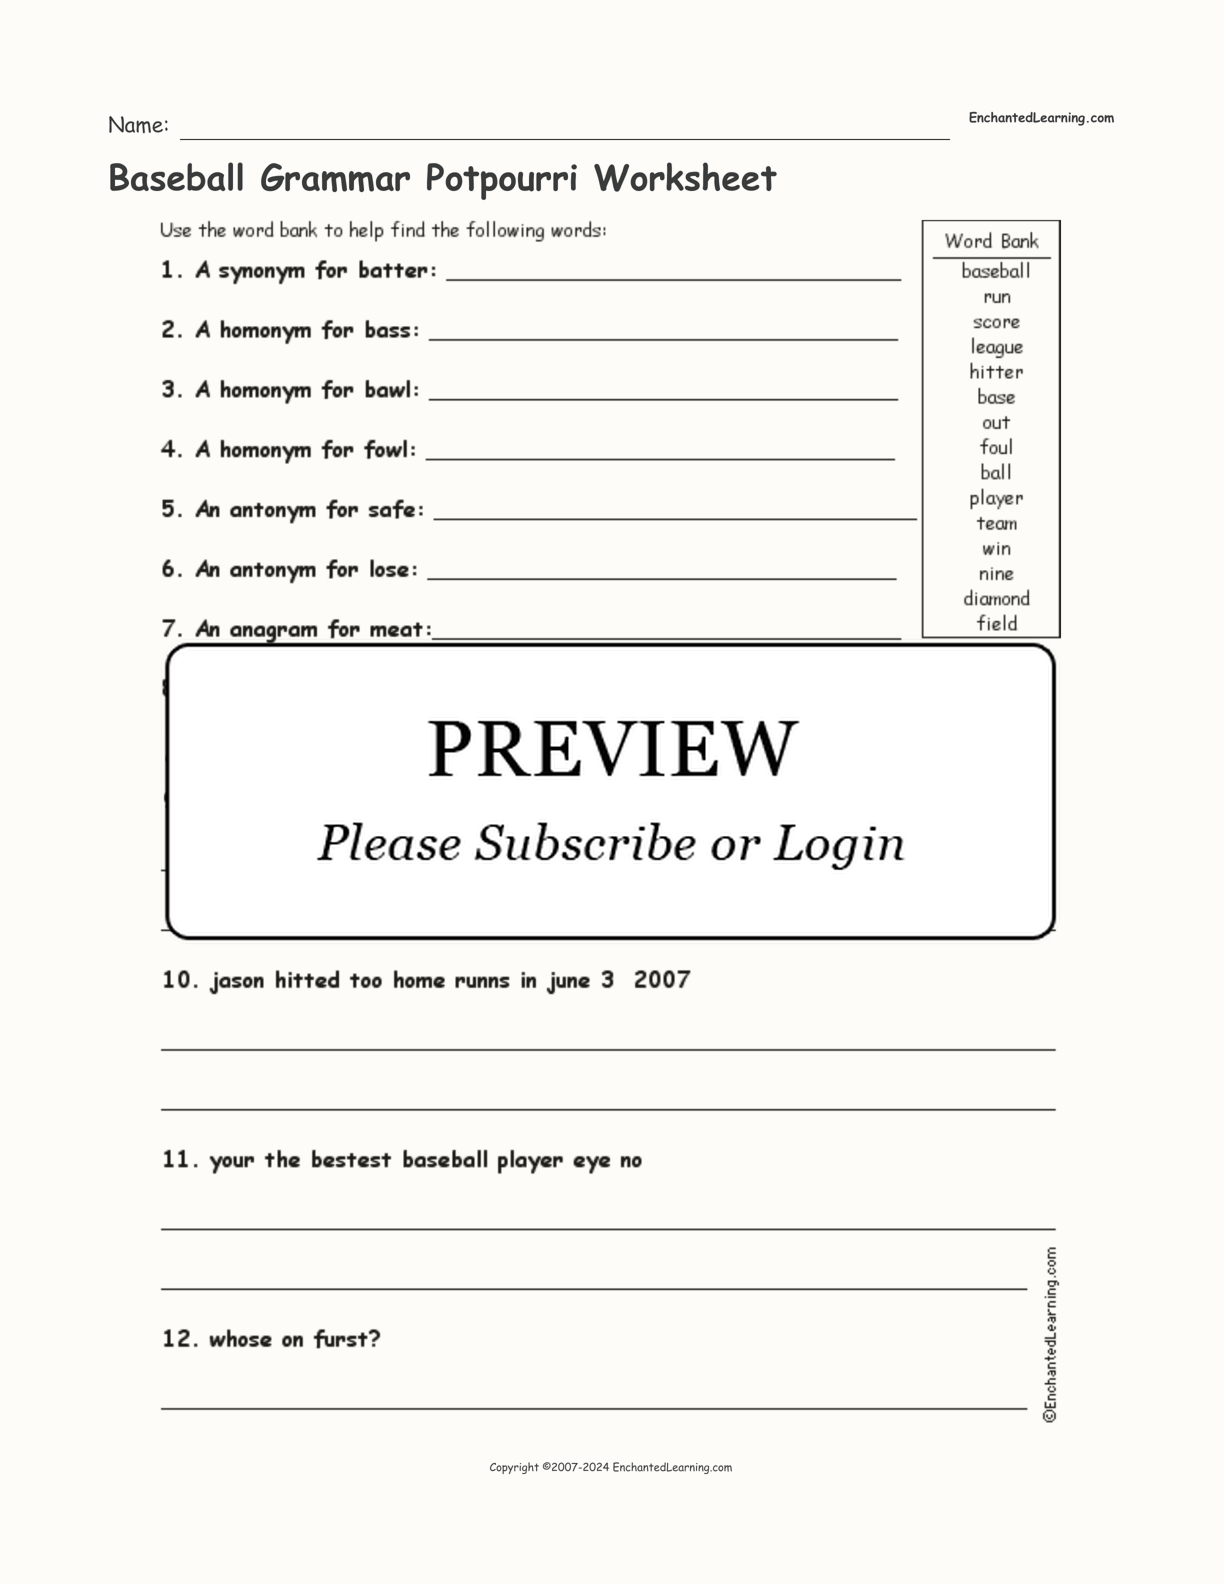 Baseball Grammar Potpourri Worksheet interactive worksheet page 1